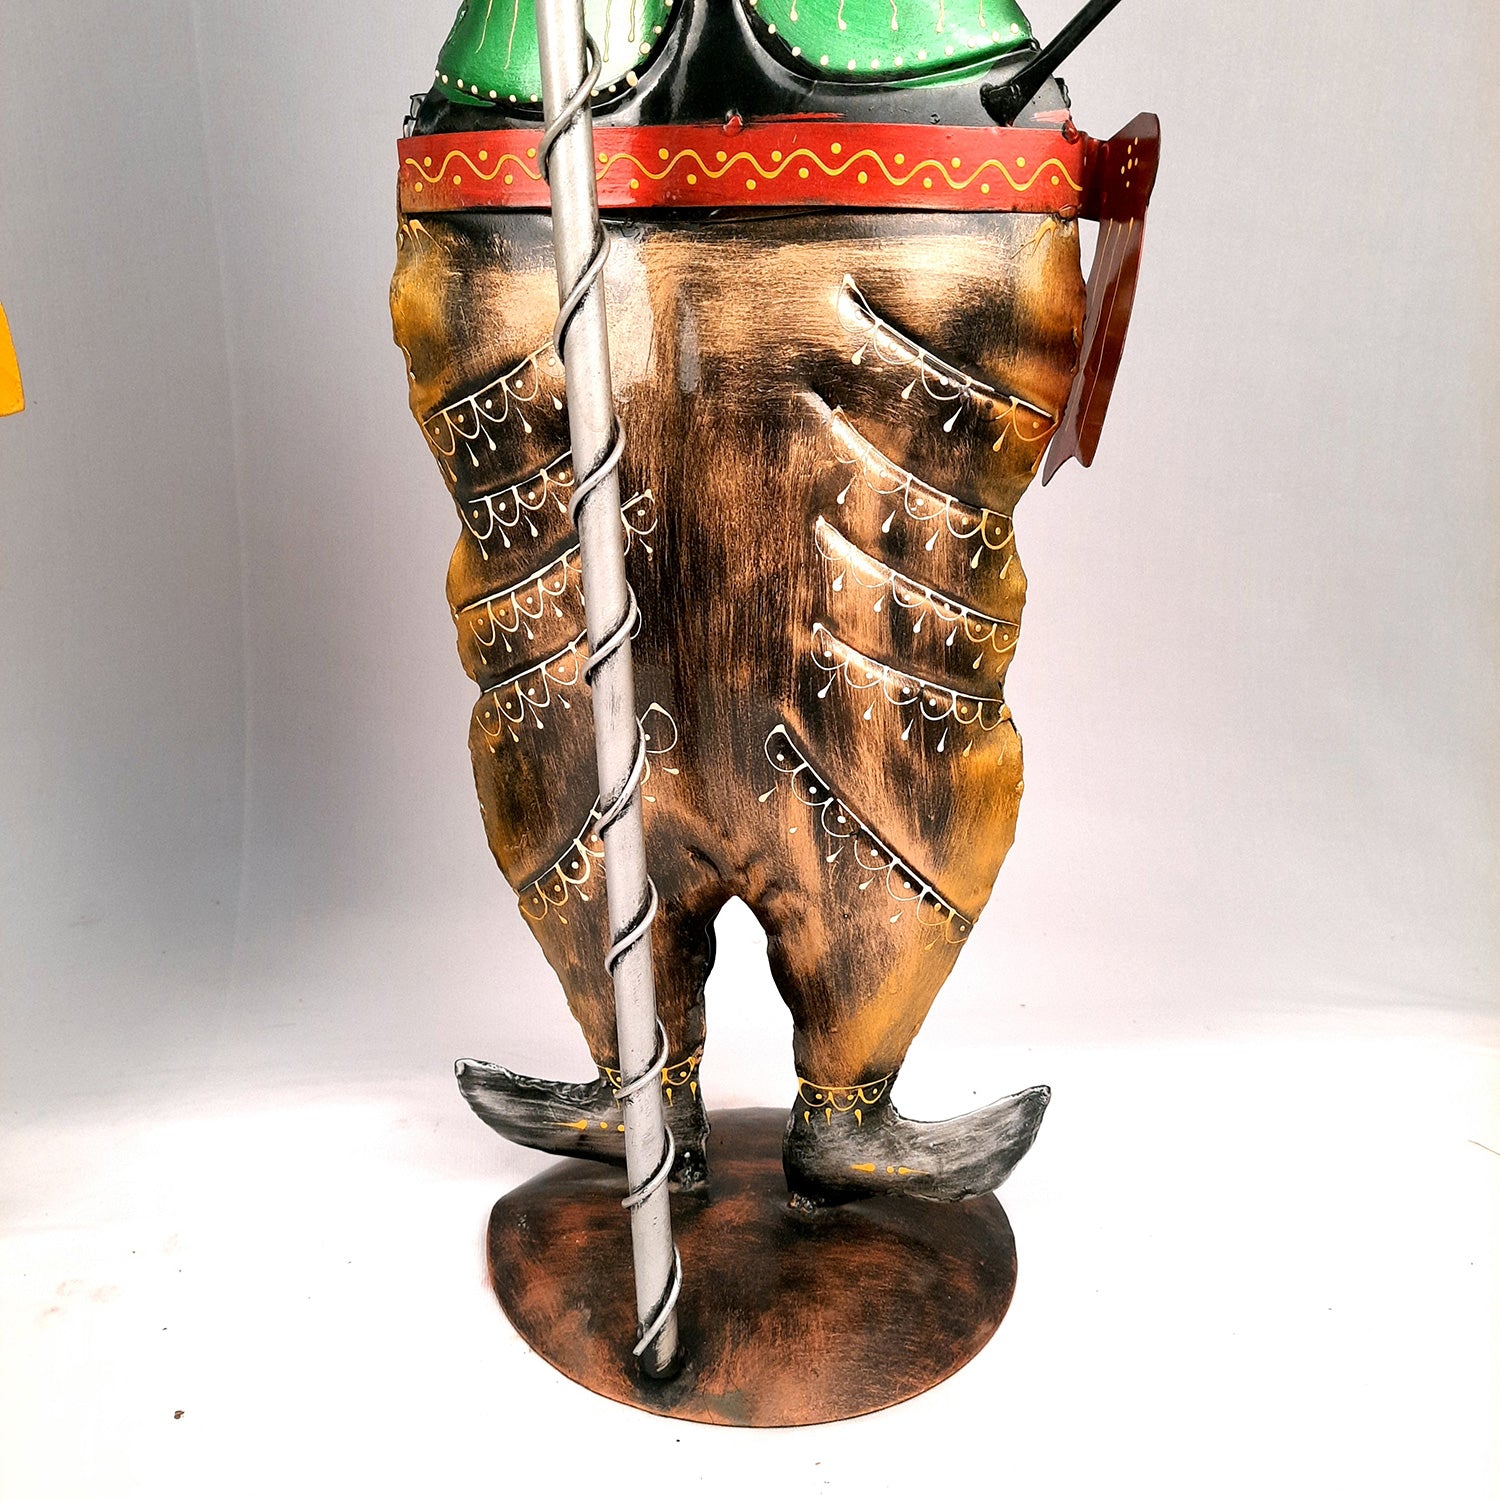 Darban Showpiece | Village Man With Lantern Figurine | Big Showpieces for Living Room - For for Home, Entrance, Corner, Living Room, Office Decor & Gifts - 28 Inch - Apkamart #style_Design 2